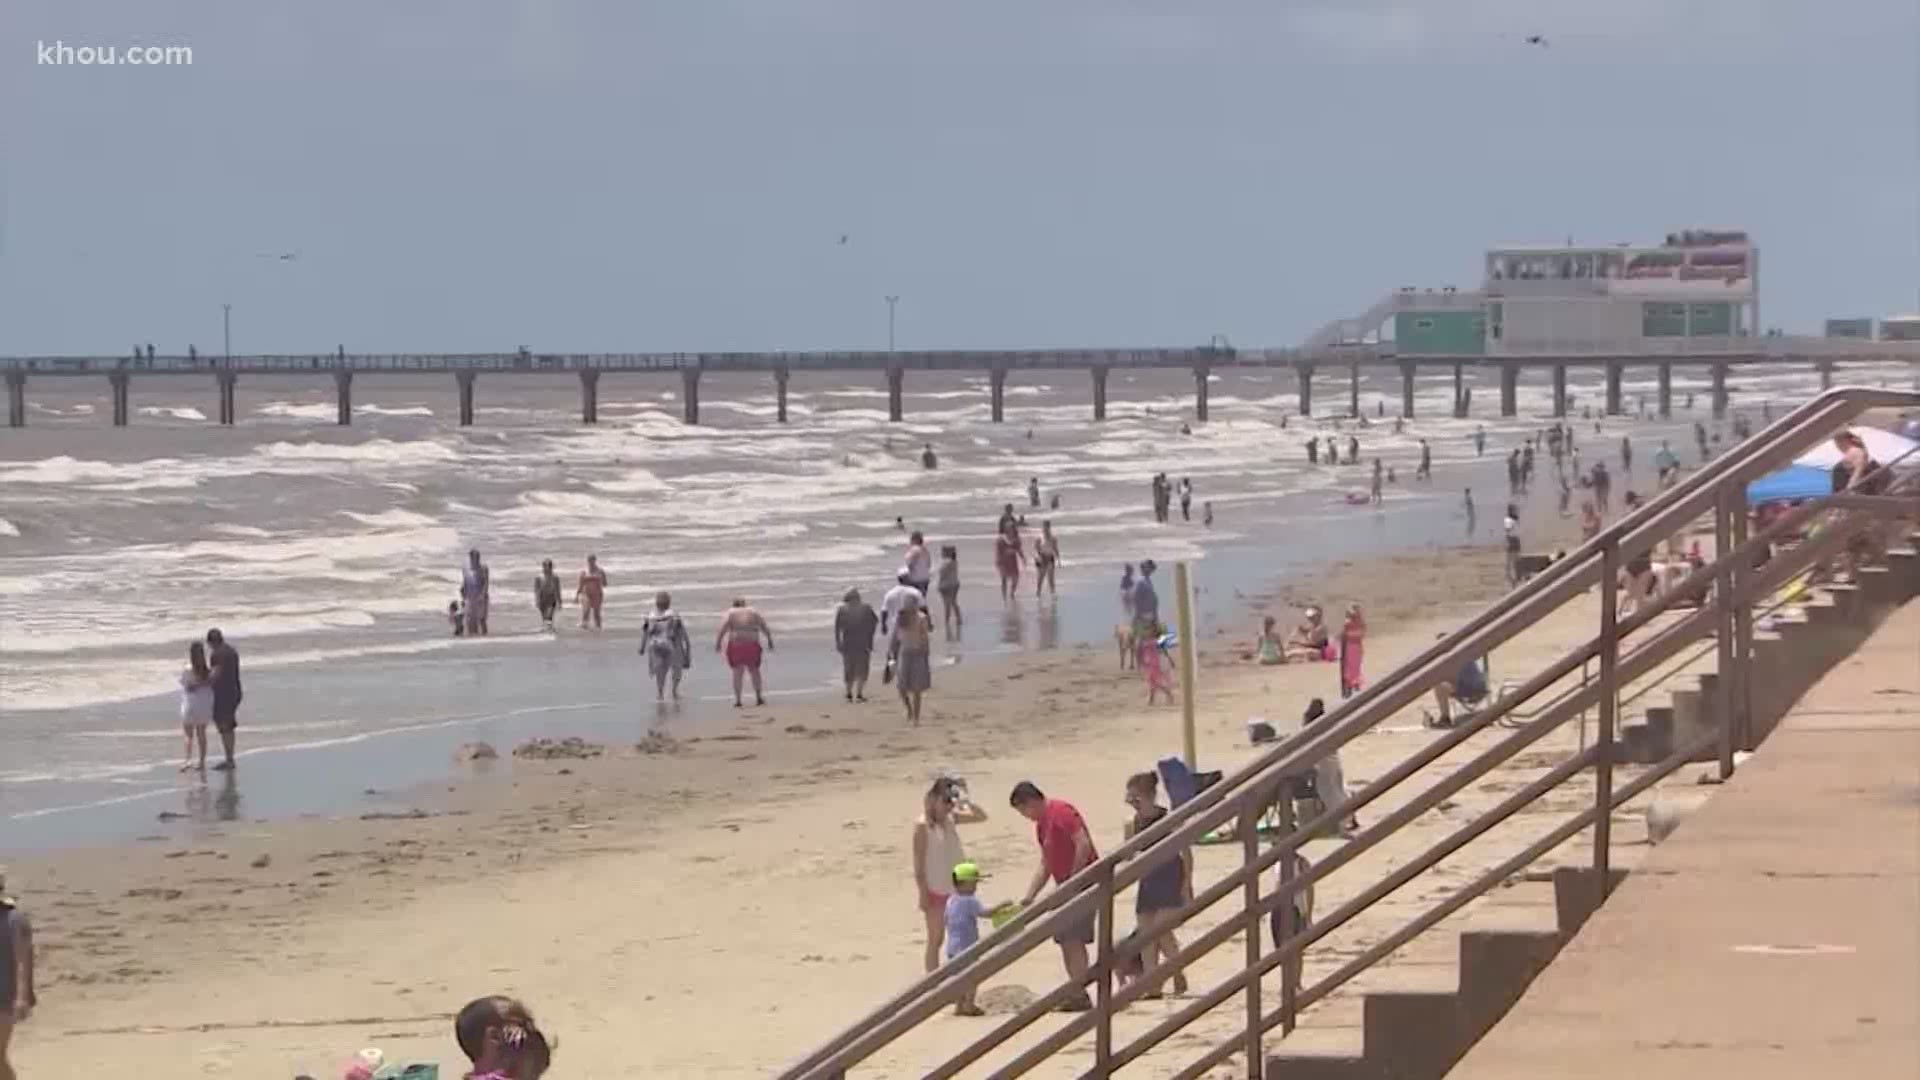 Topless Beach Live Webcam - Increasing patrols during Jeep weekend on Crystal Beach in Galveston |  khou.com